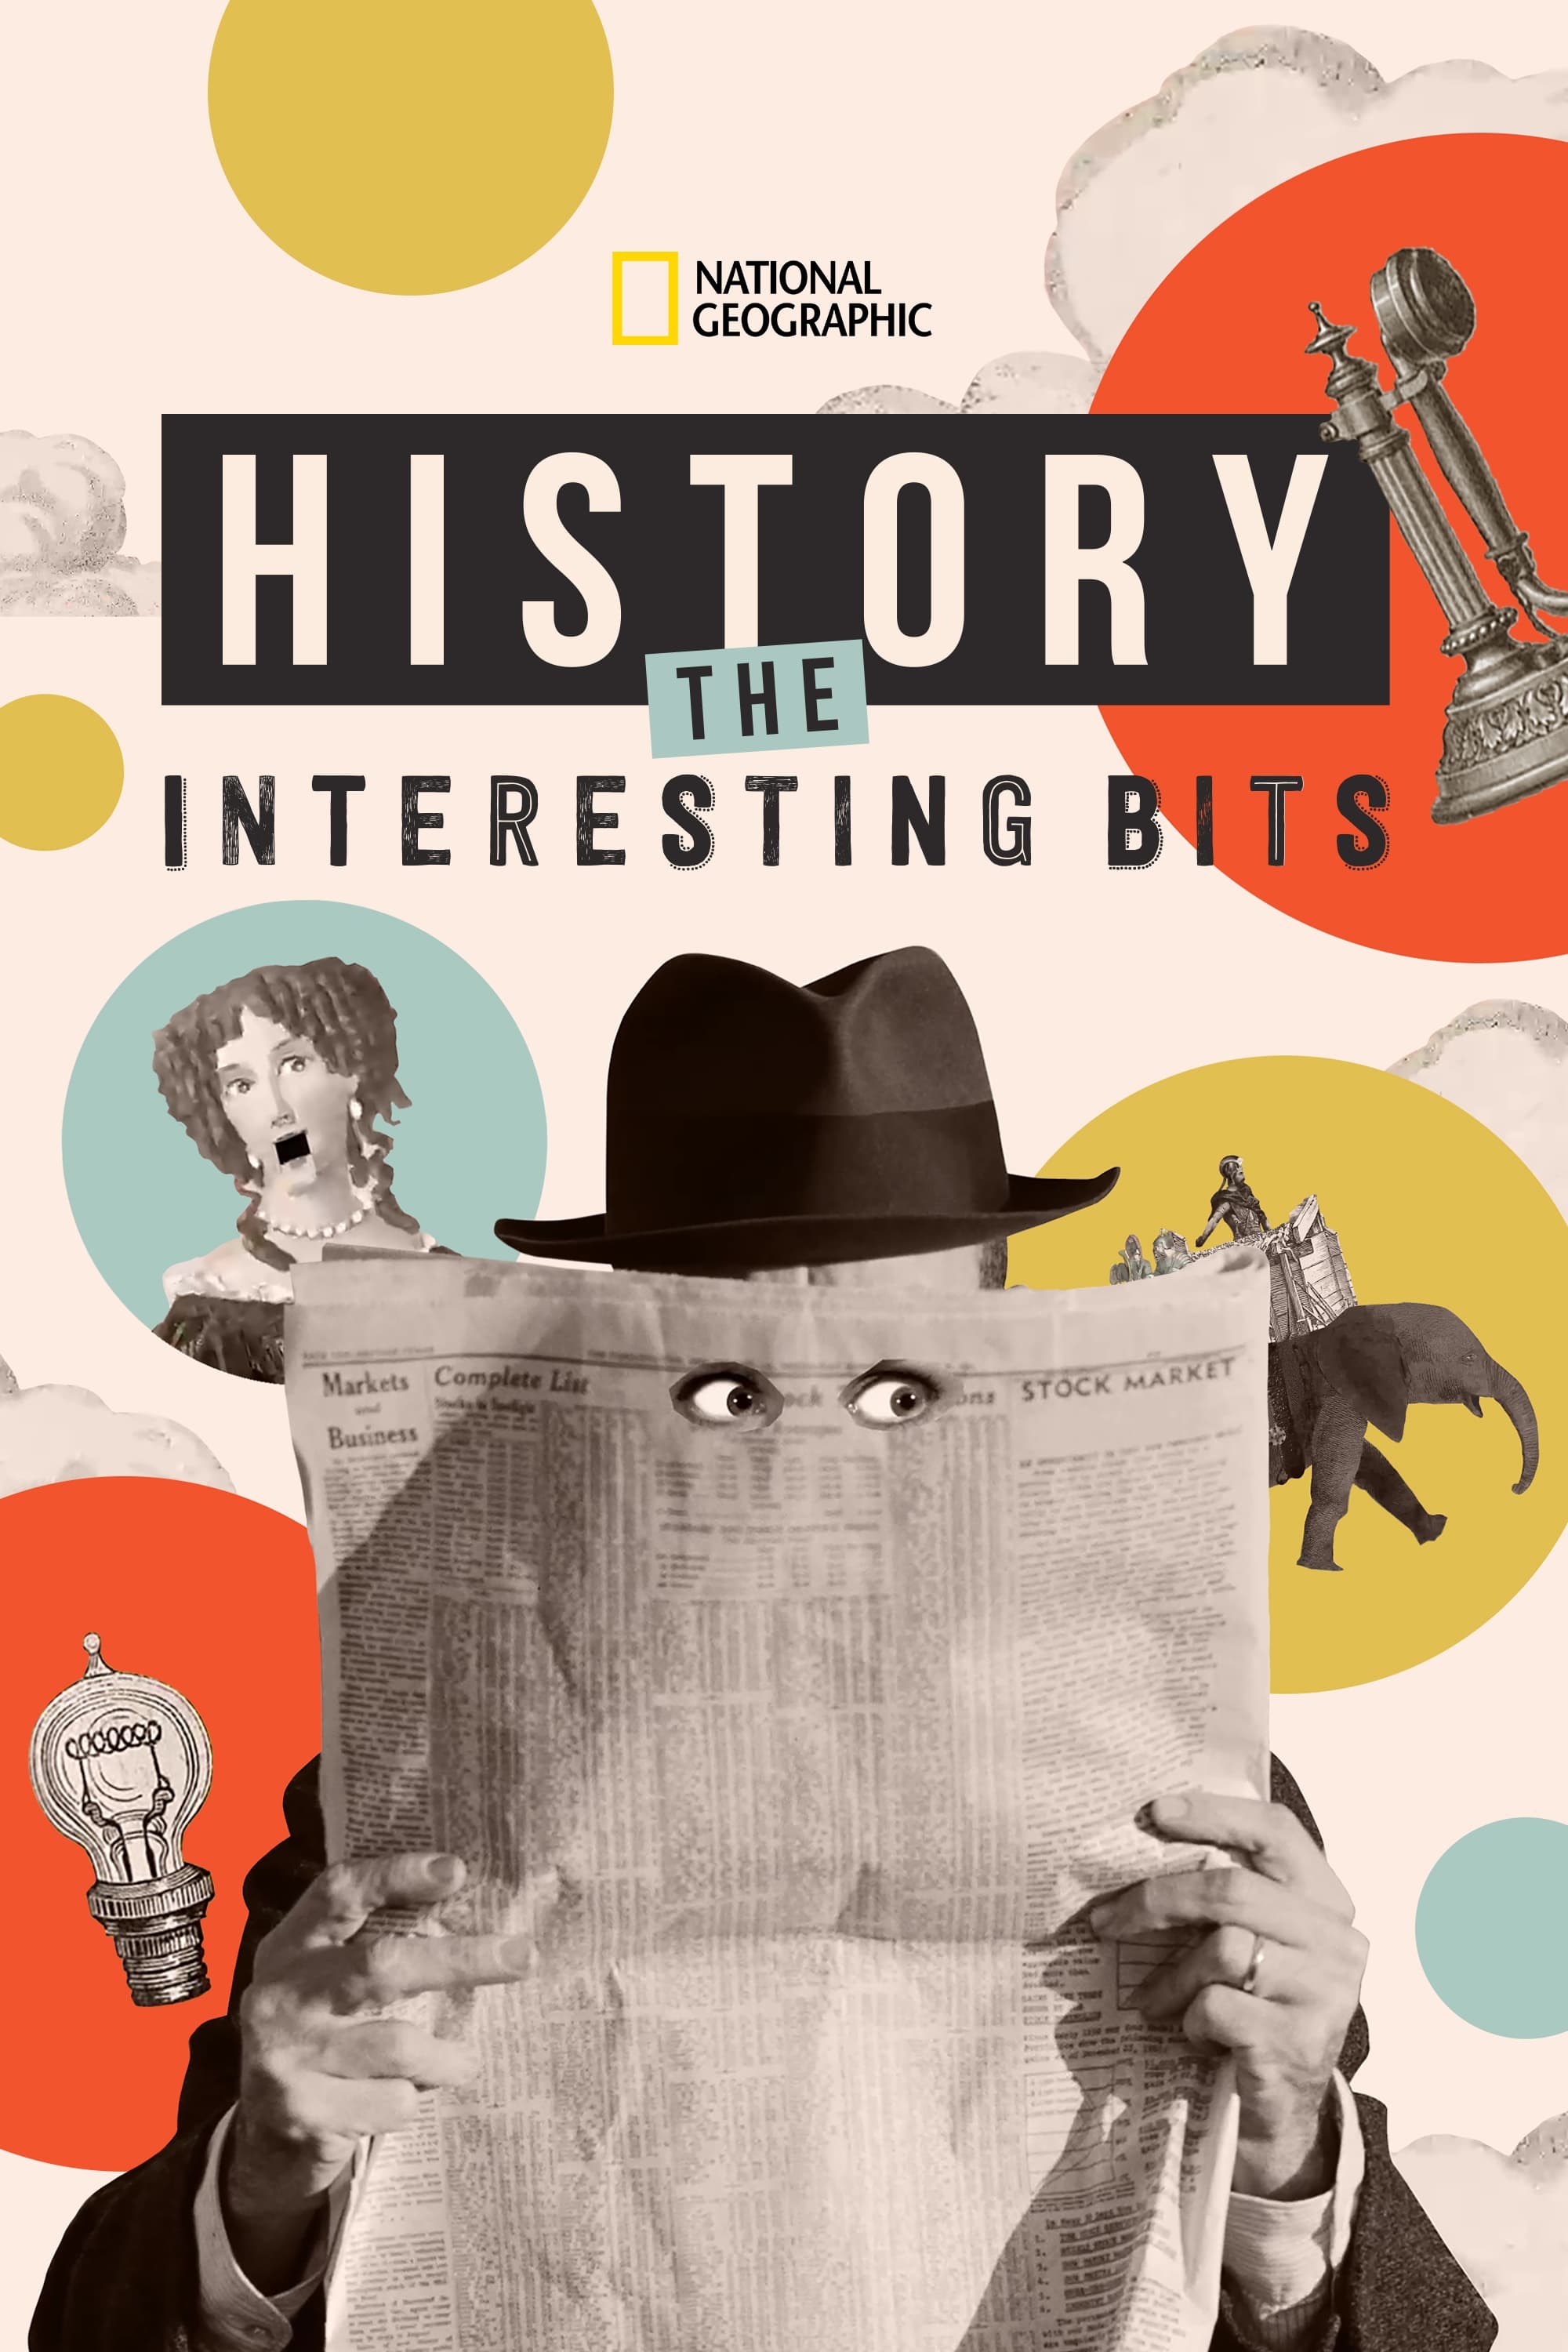 History: The Interesting Bits